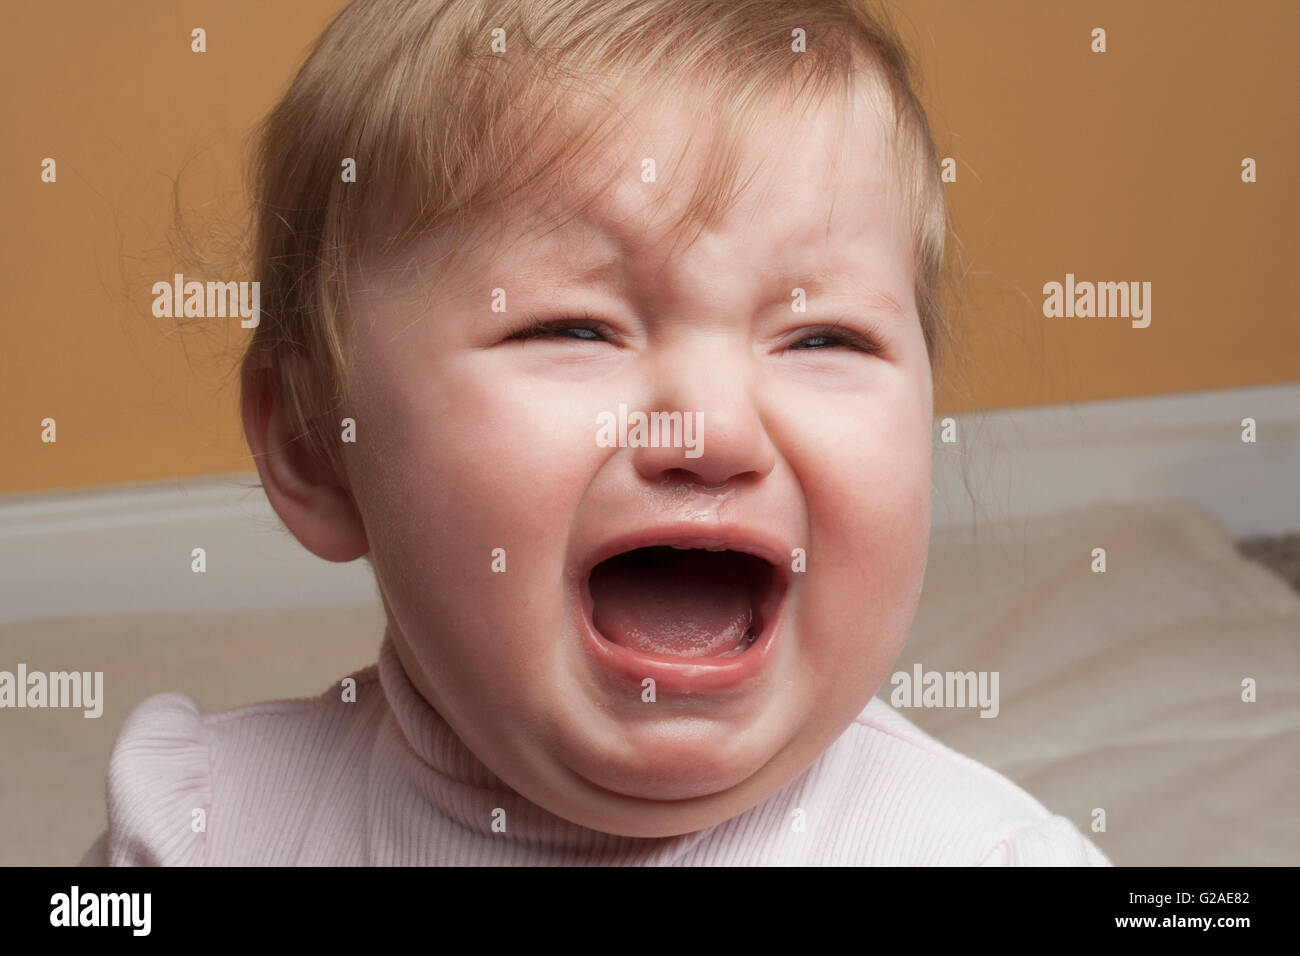 Portrait of baby girl crying Stock Photo - Alamy